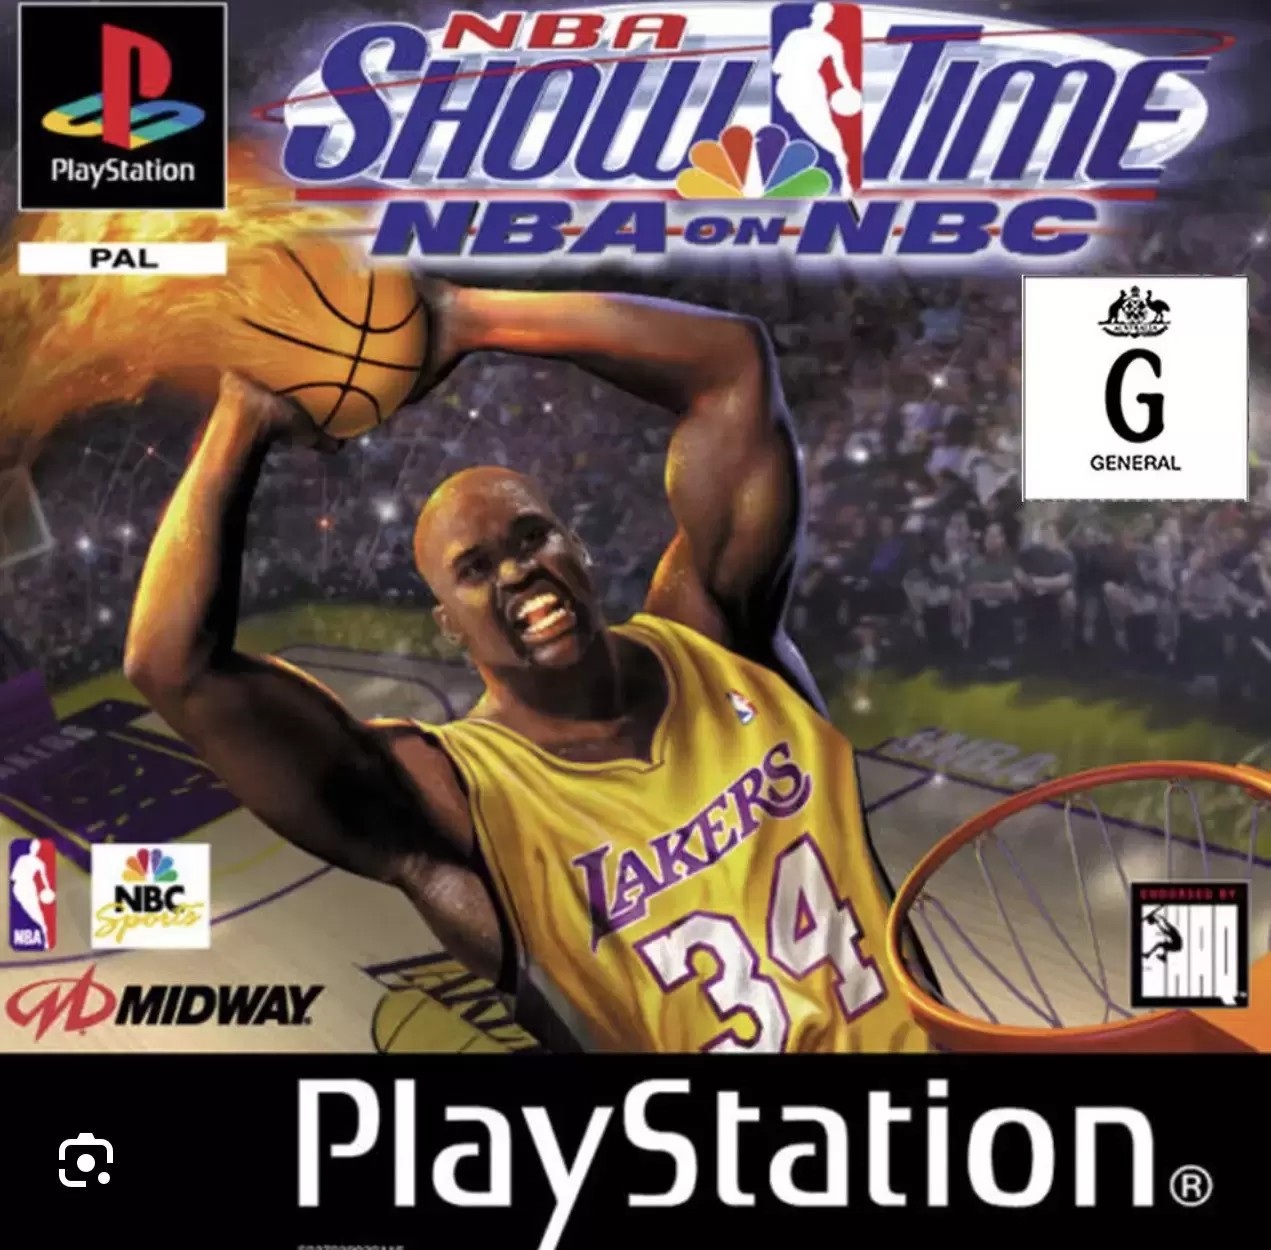 Playstation games - Nba Showtime Nba On Nbc